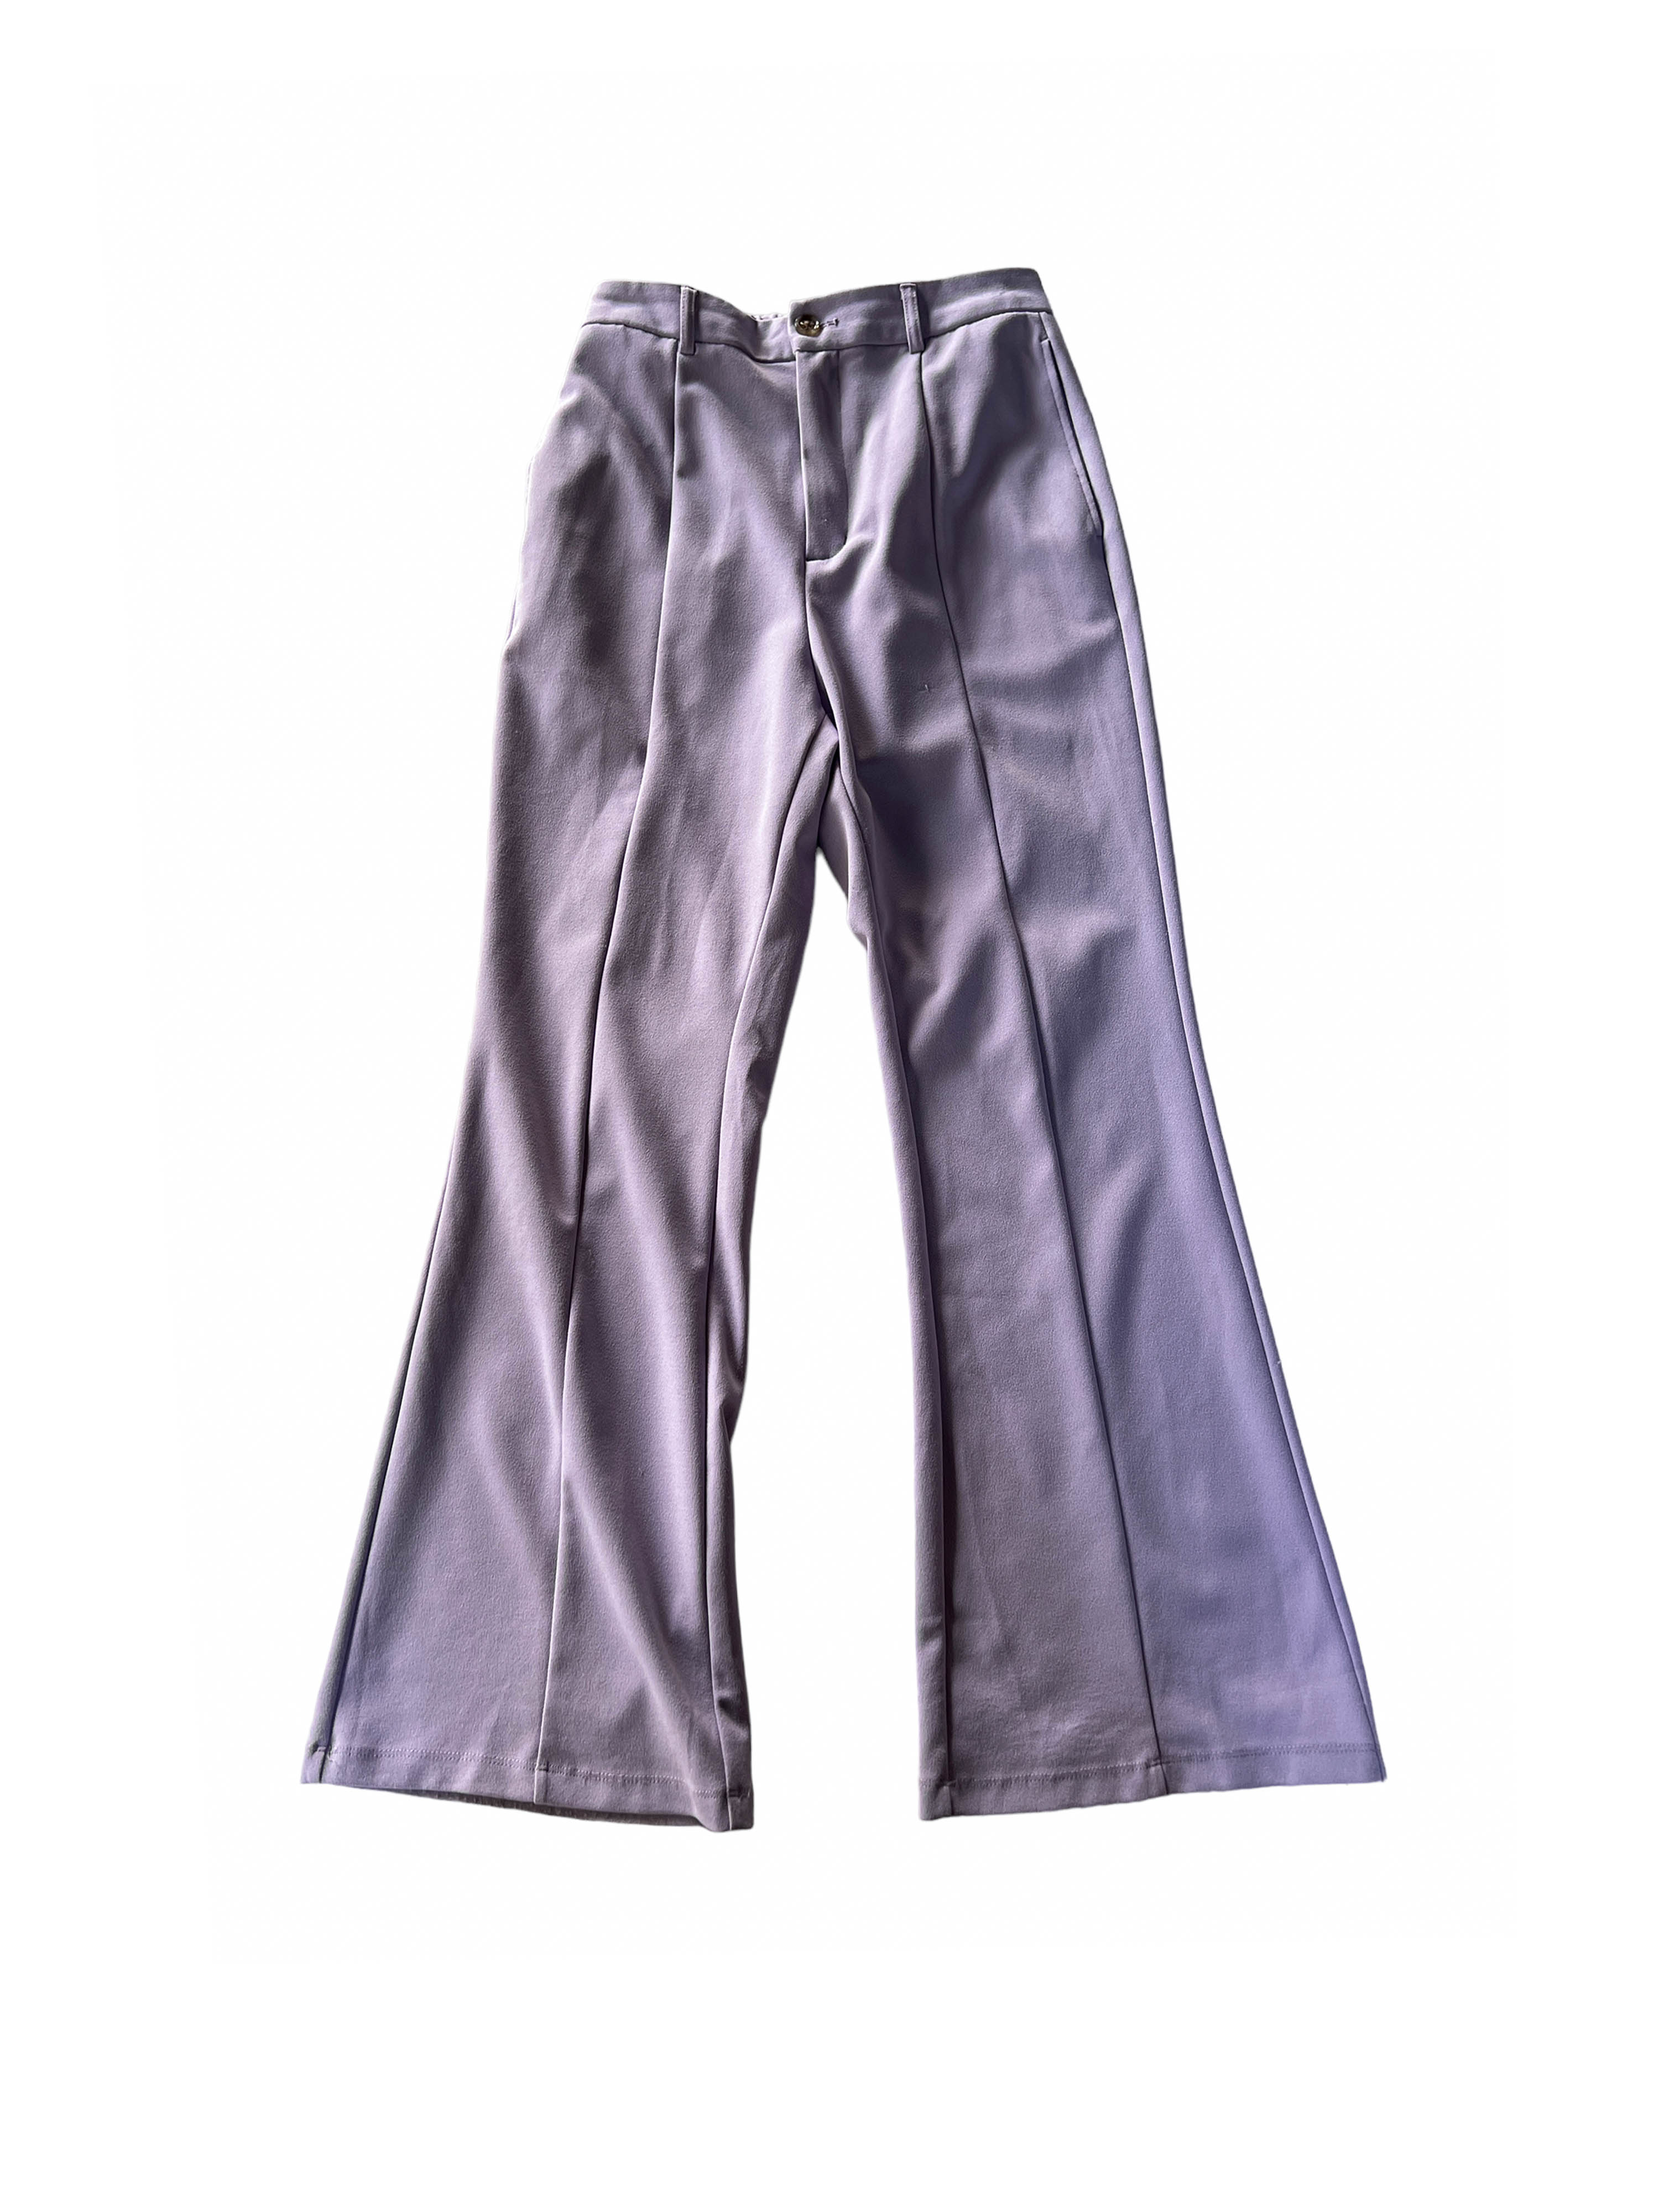 GU purple boots cut pants